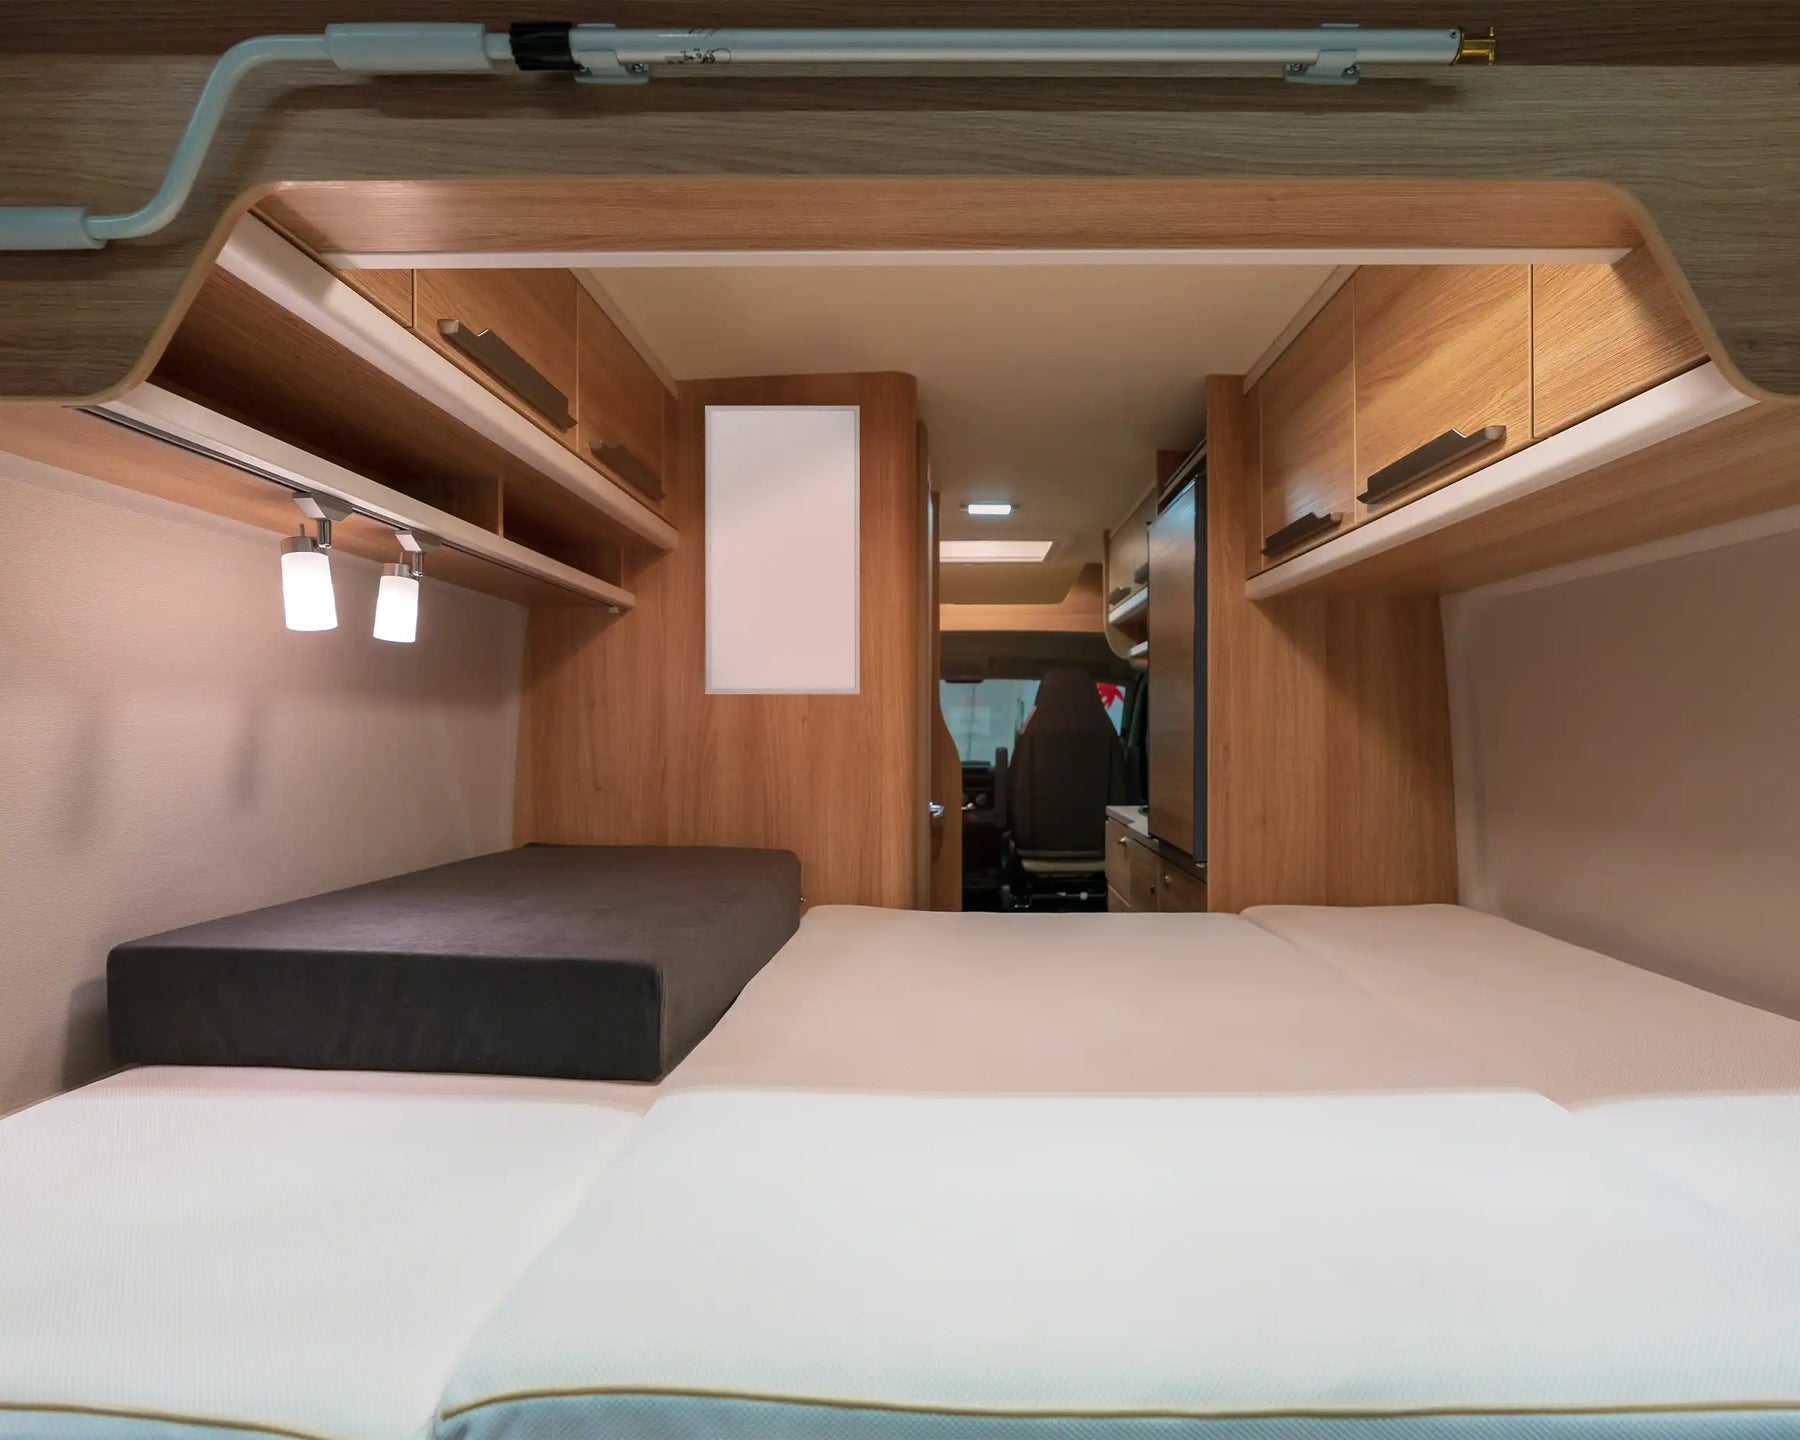 Kiasa 180w Camper Van Wall Mounted Infrared Heater bedroom Low Wattage Heater Portable